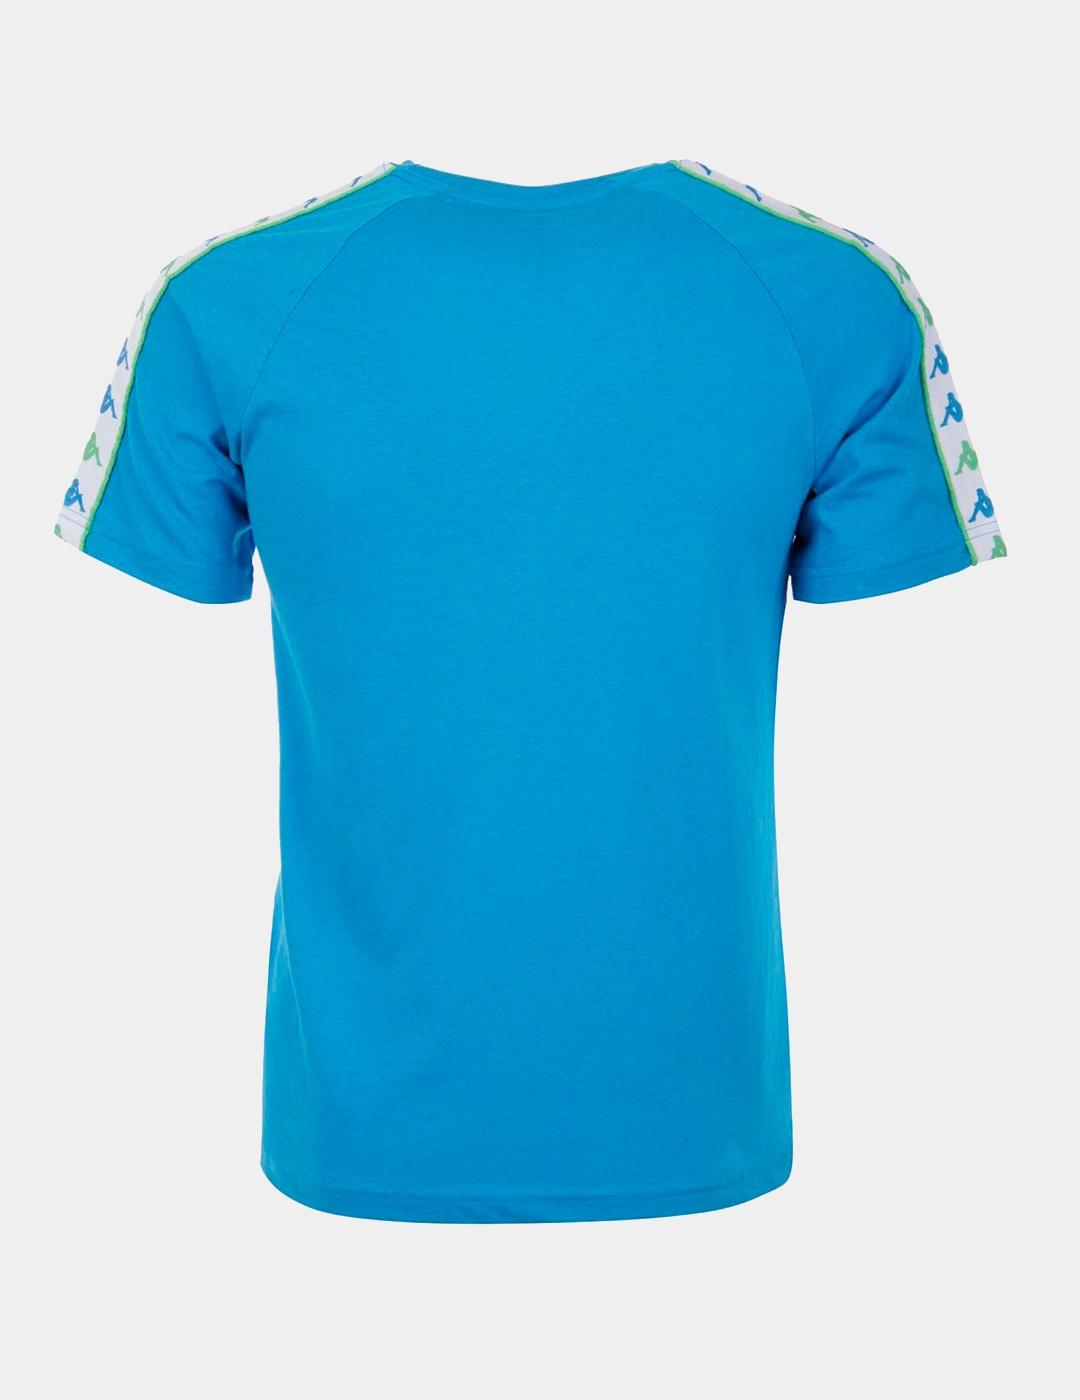 Camiseta KAPPA COENI - Blue Smurf/White/Green Dusty